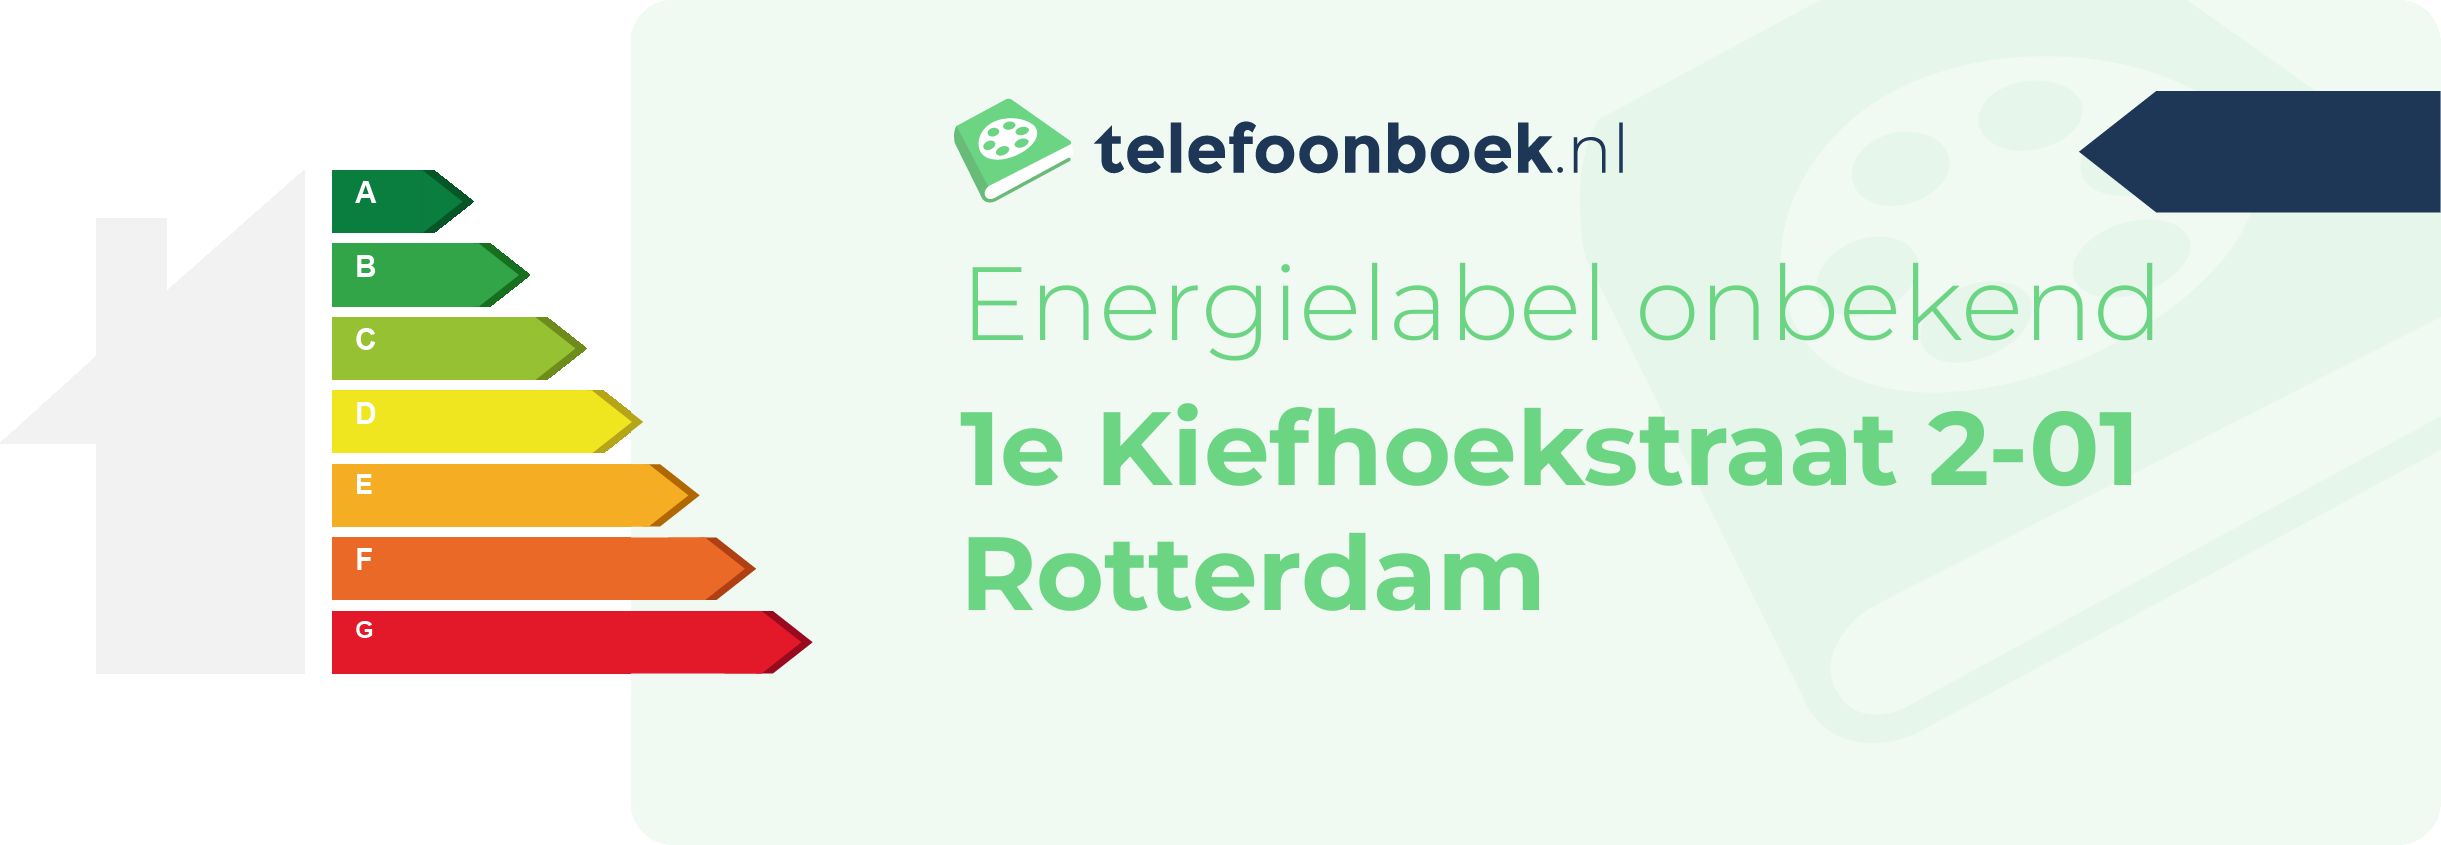 Energielabel 1e Kiefhoekstraat 2-01 Rotterdam